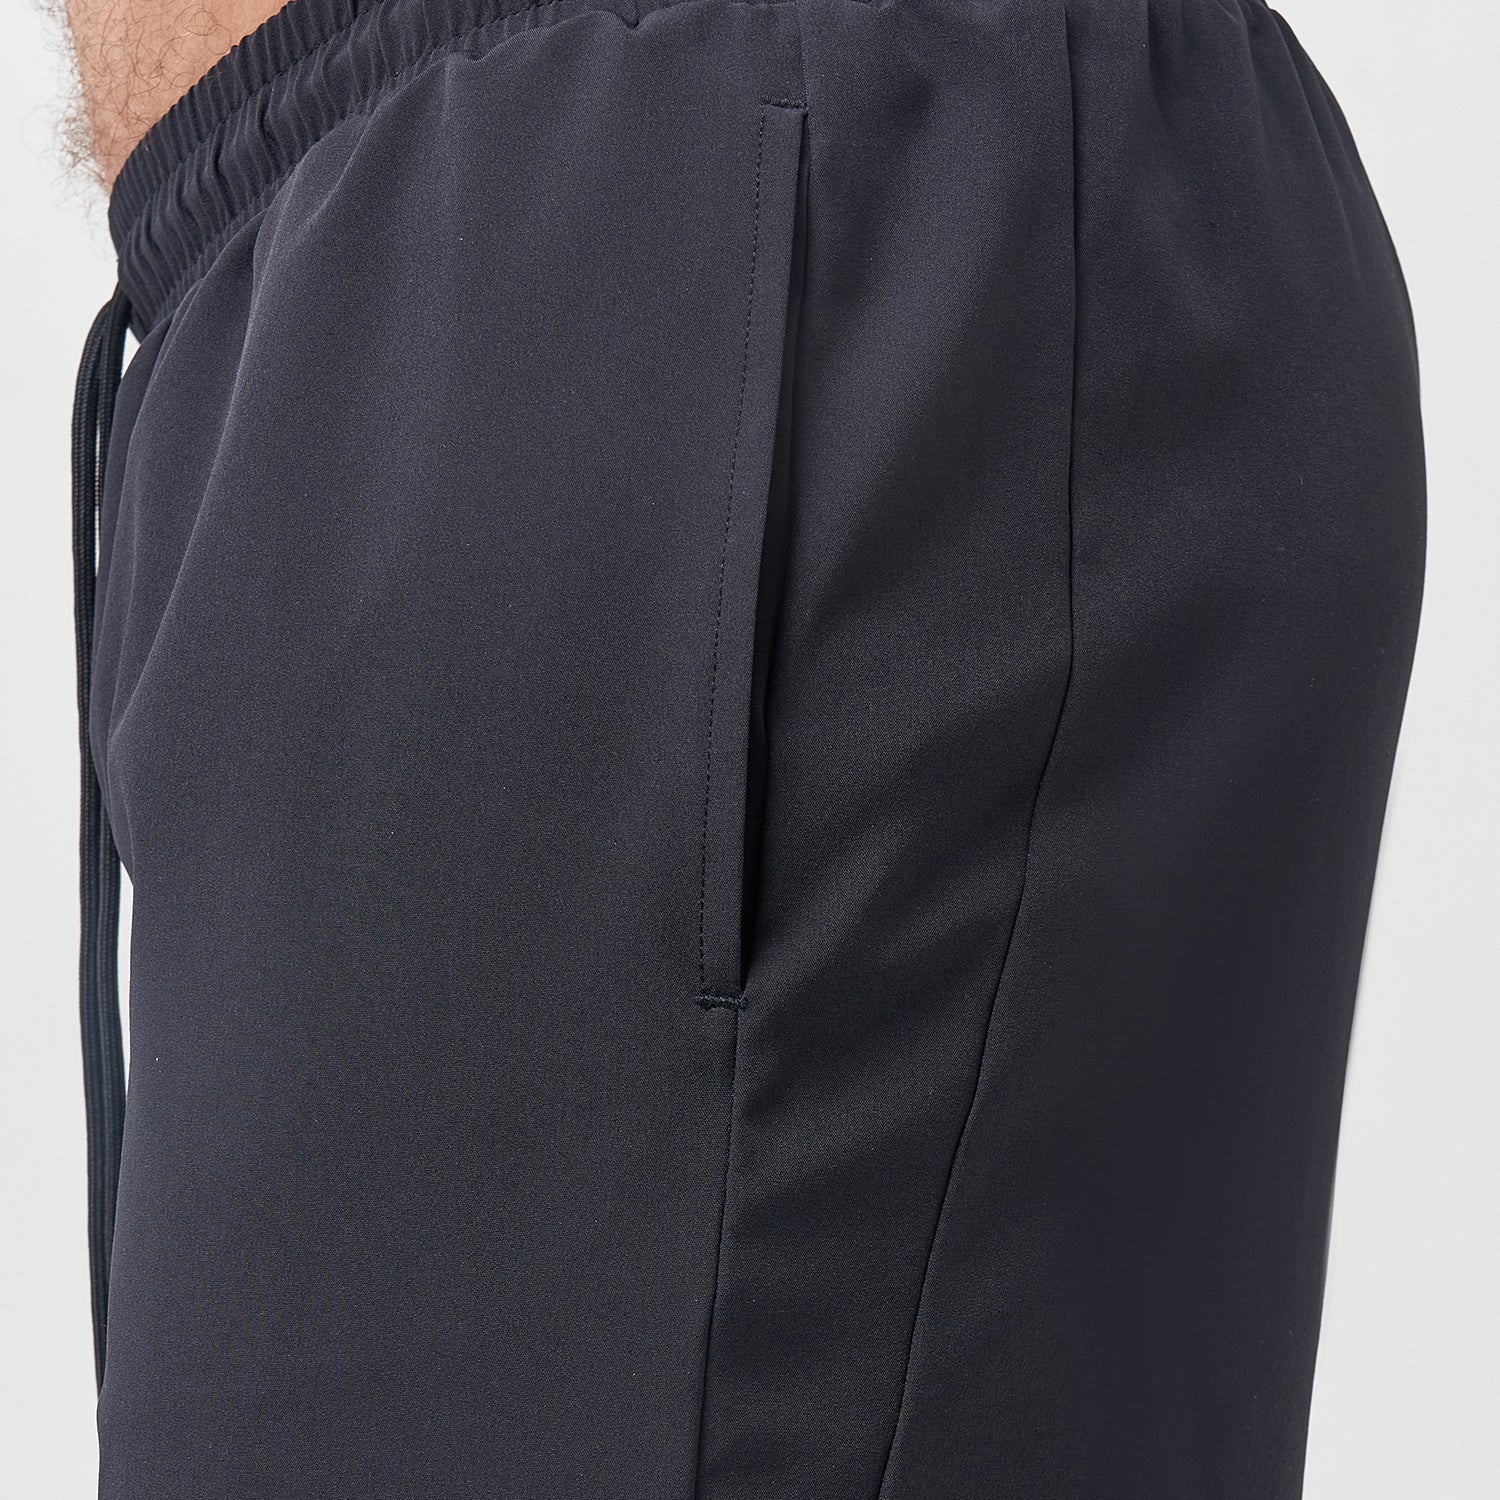 squatwolf-gym-wear-essential-9-inch-shorts-black-workout-short-for-men